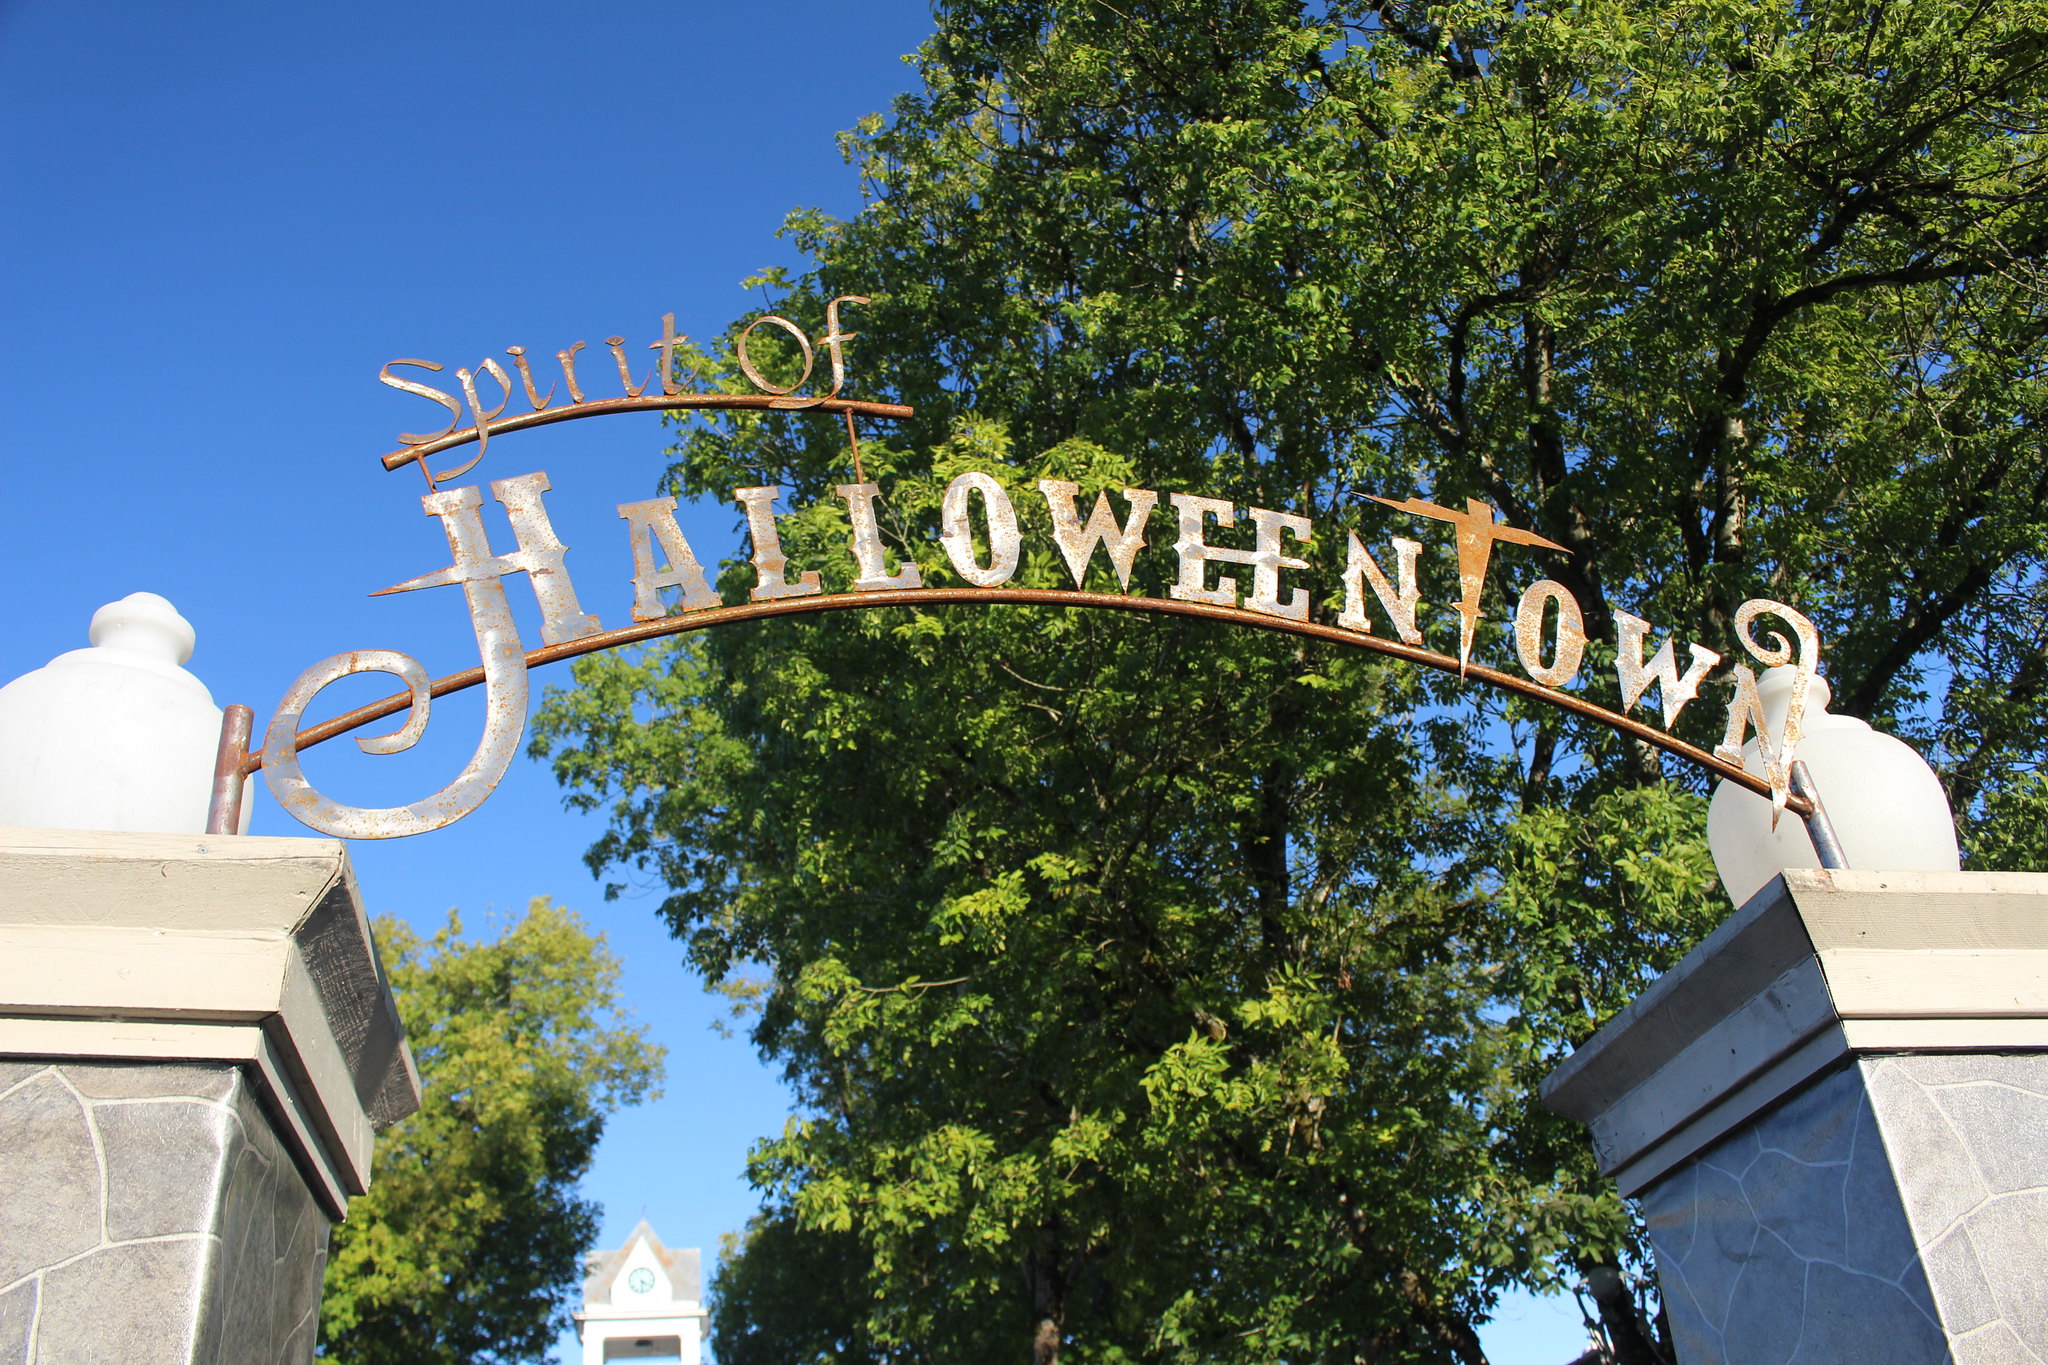 Halloweentown in St. Helens, Oregon